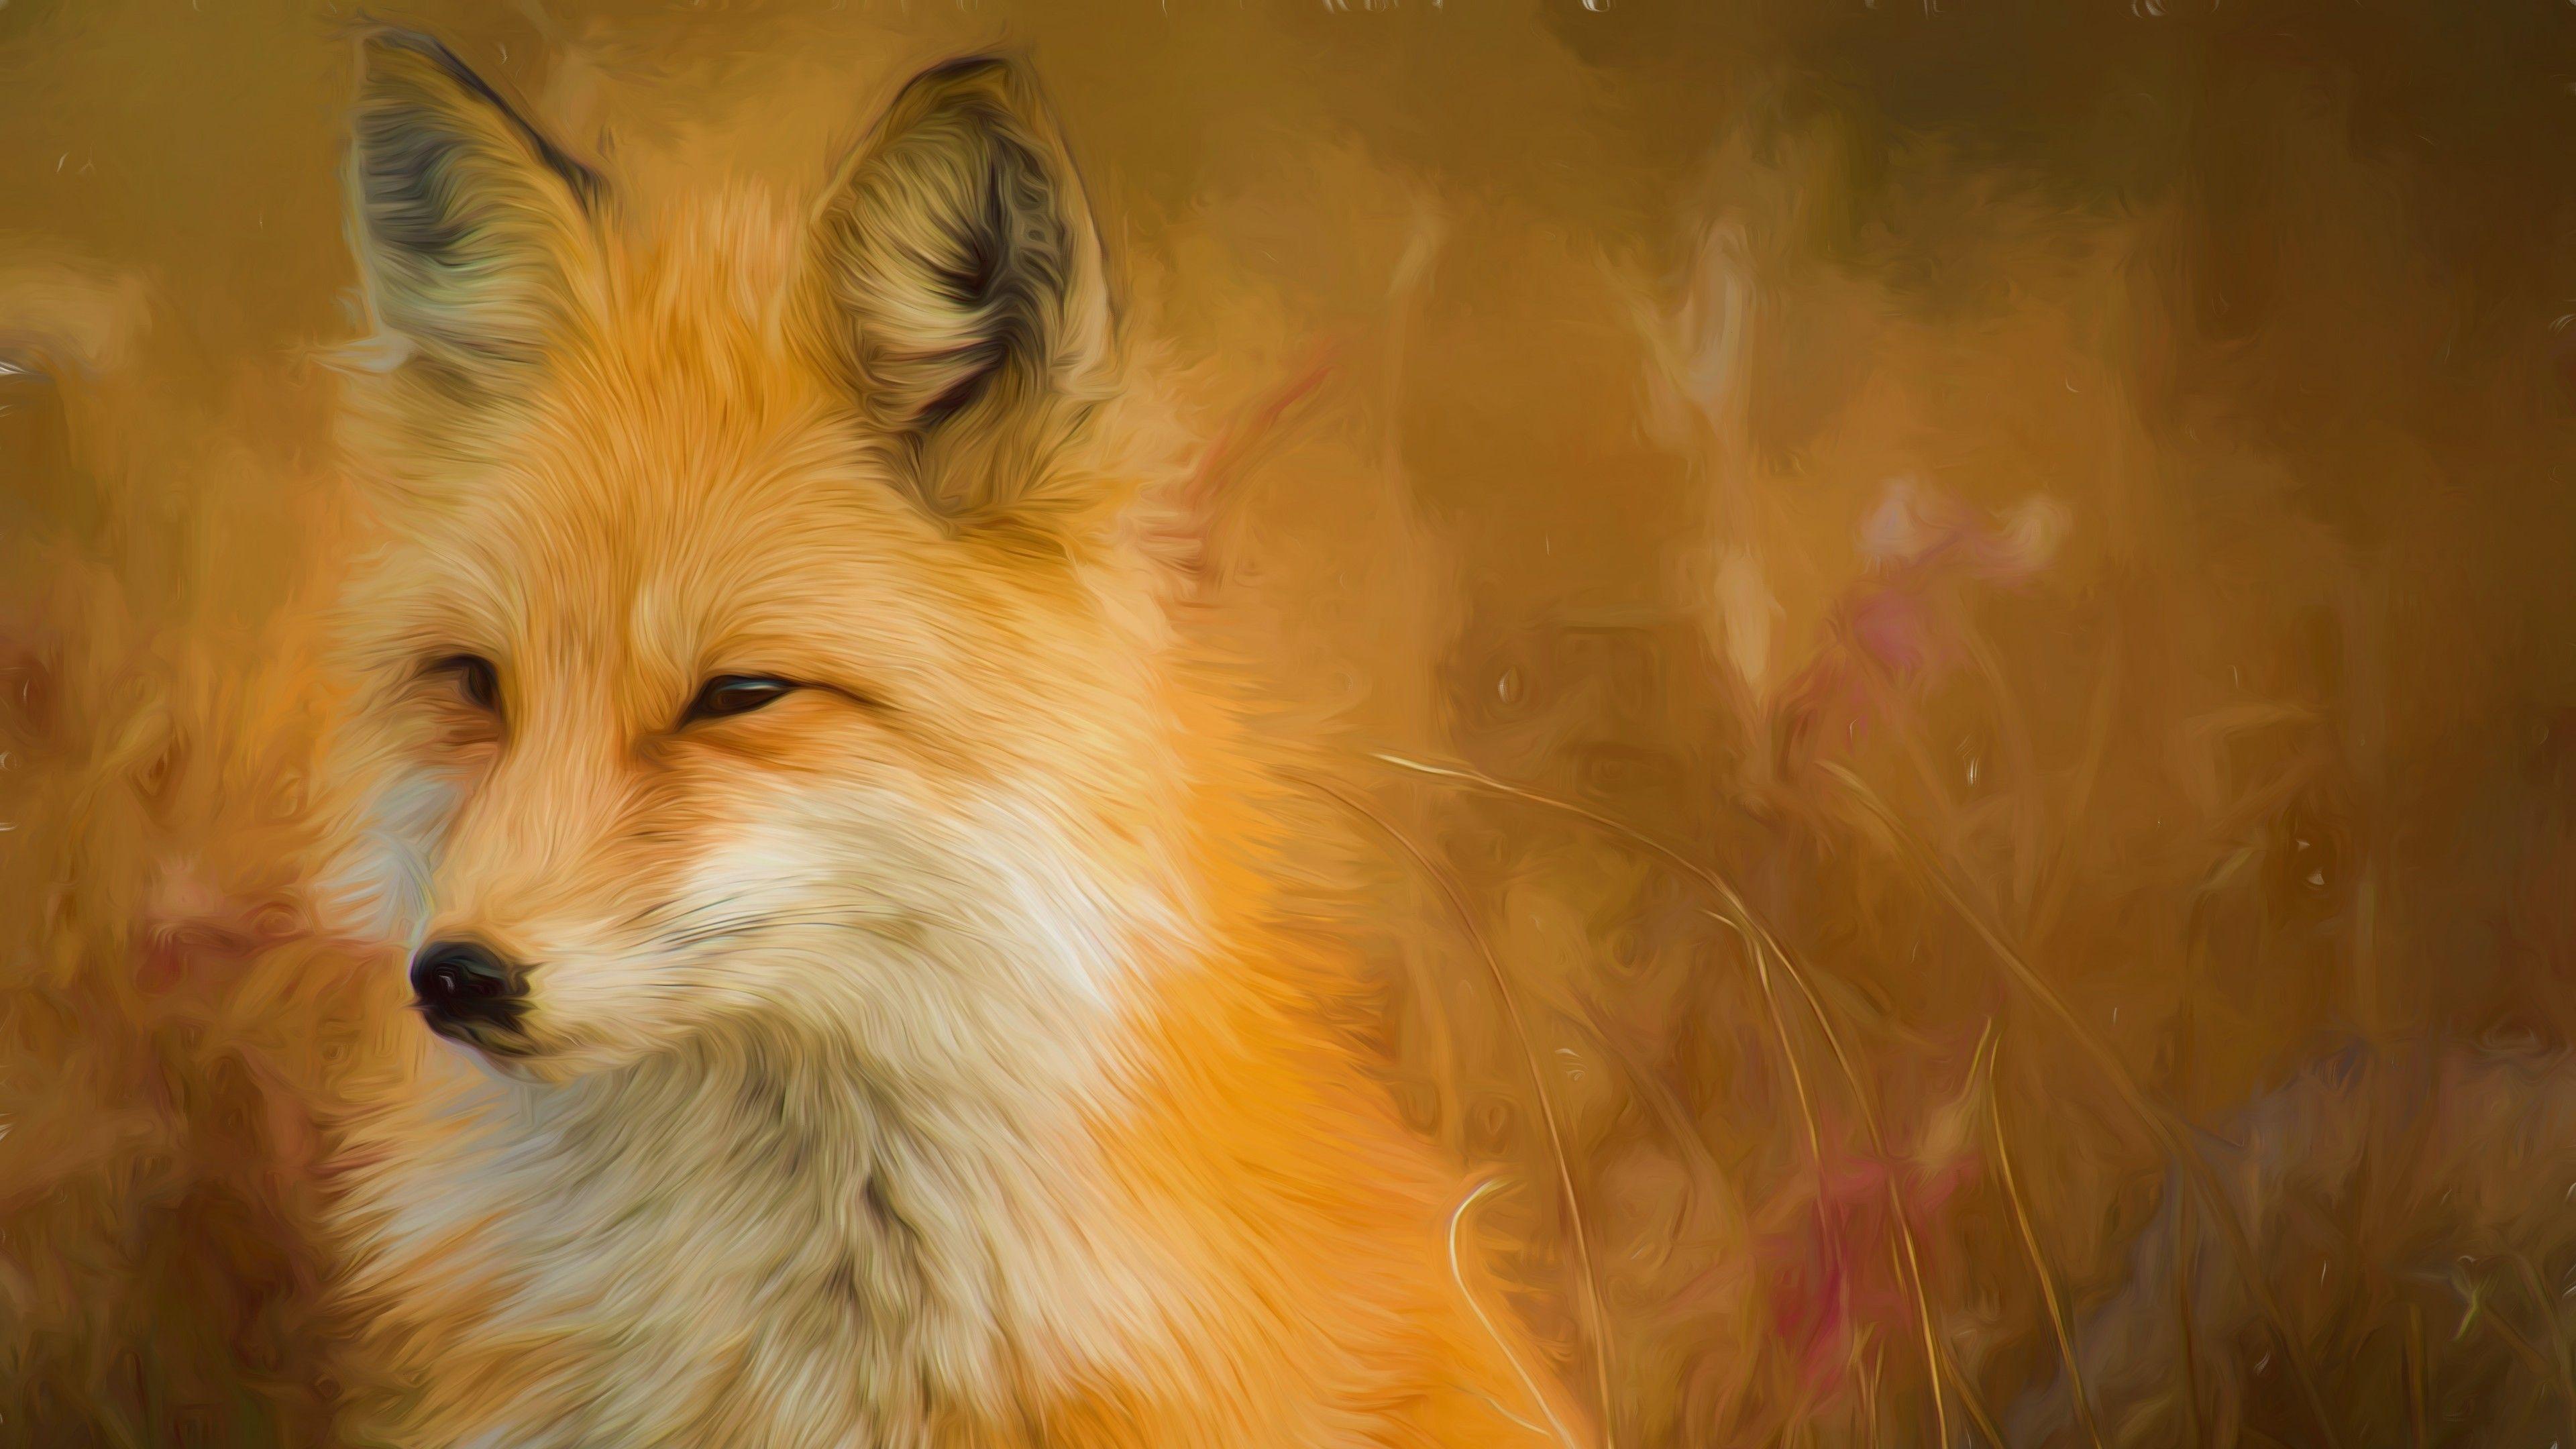 Red Fox In The Autumn Field Art 4K UltraHD Wallpaper